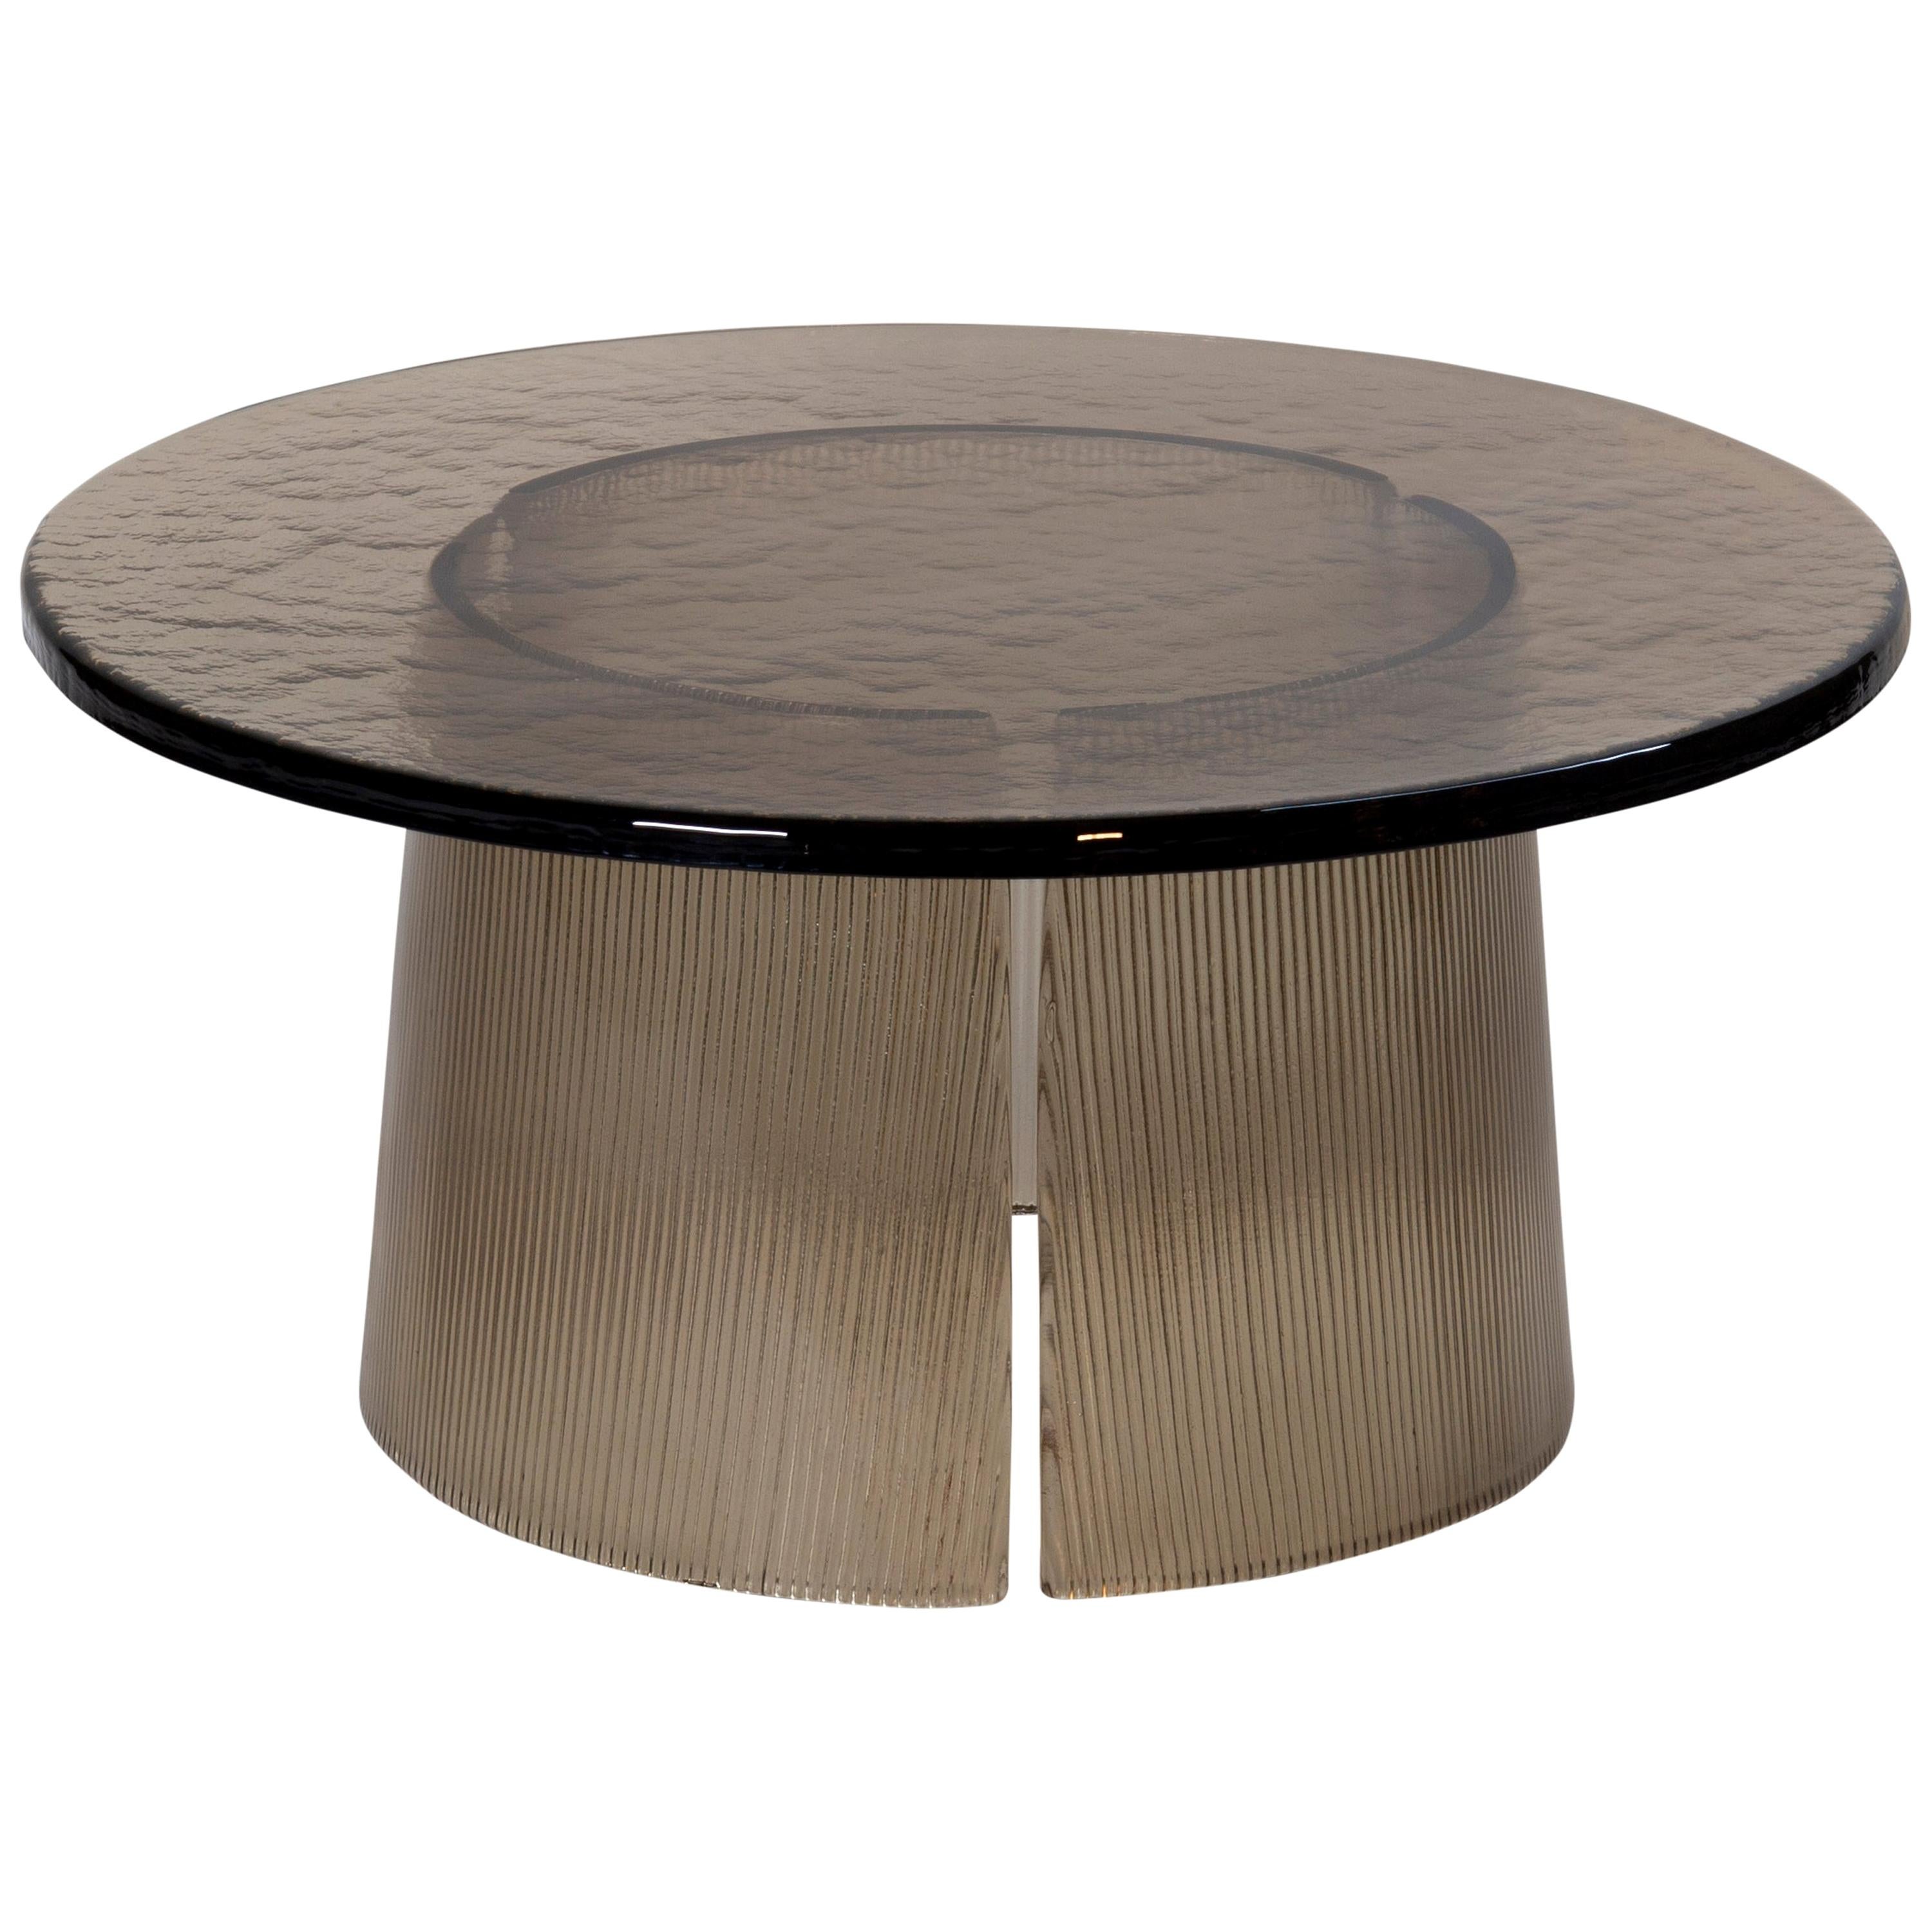 Bent Side Table, European, Minimalist, Grey, German, Table, Big For Sale